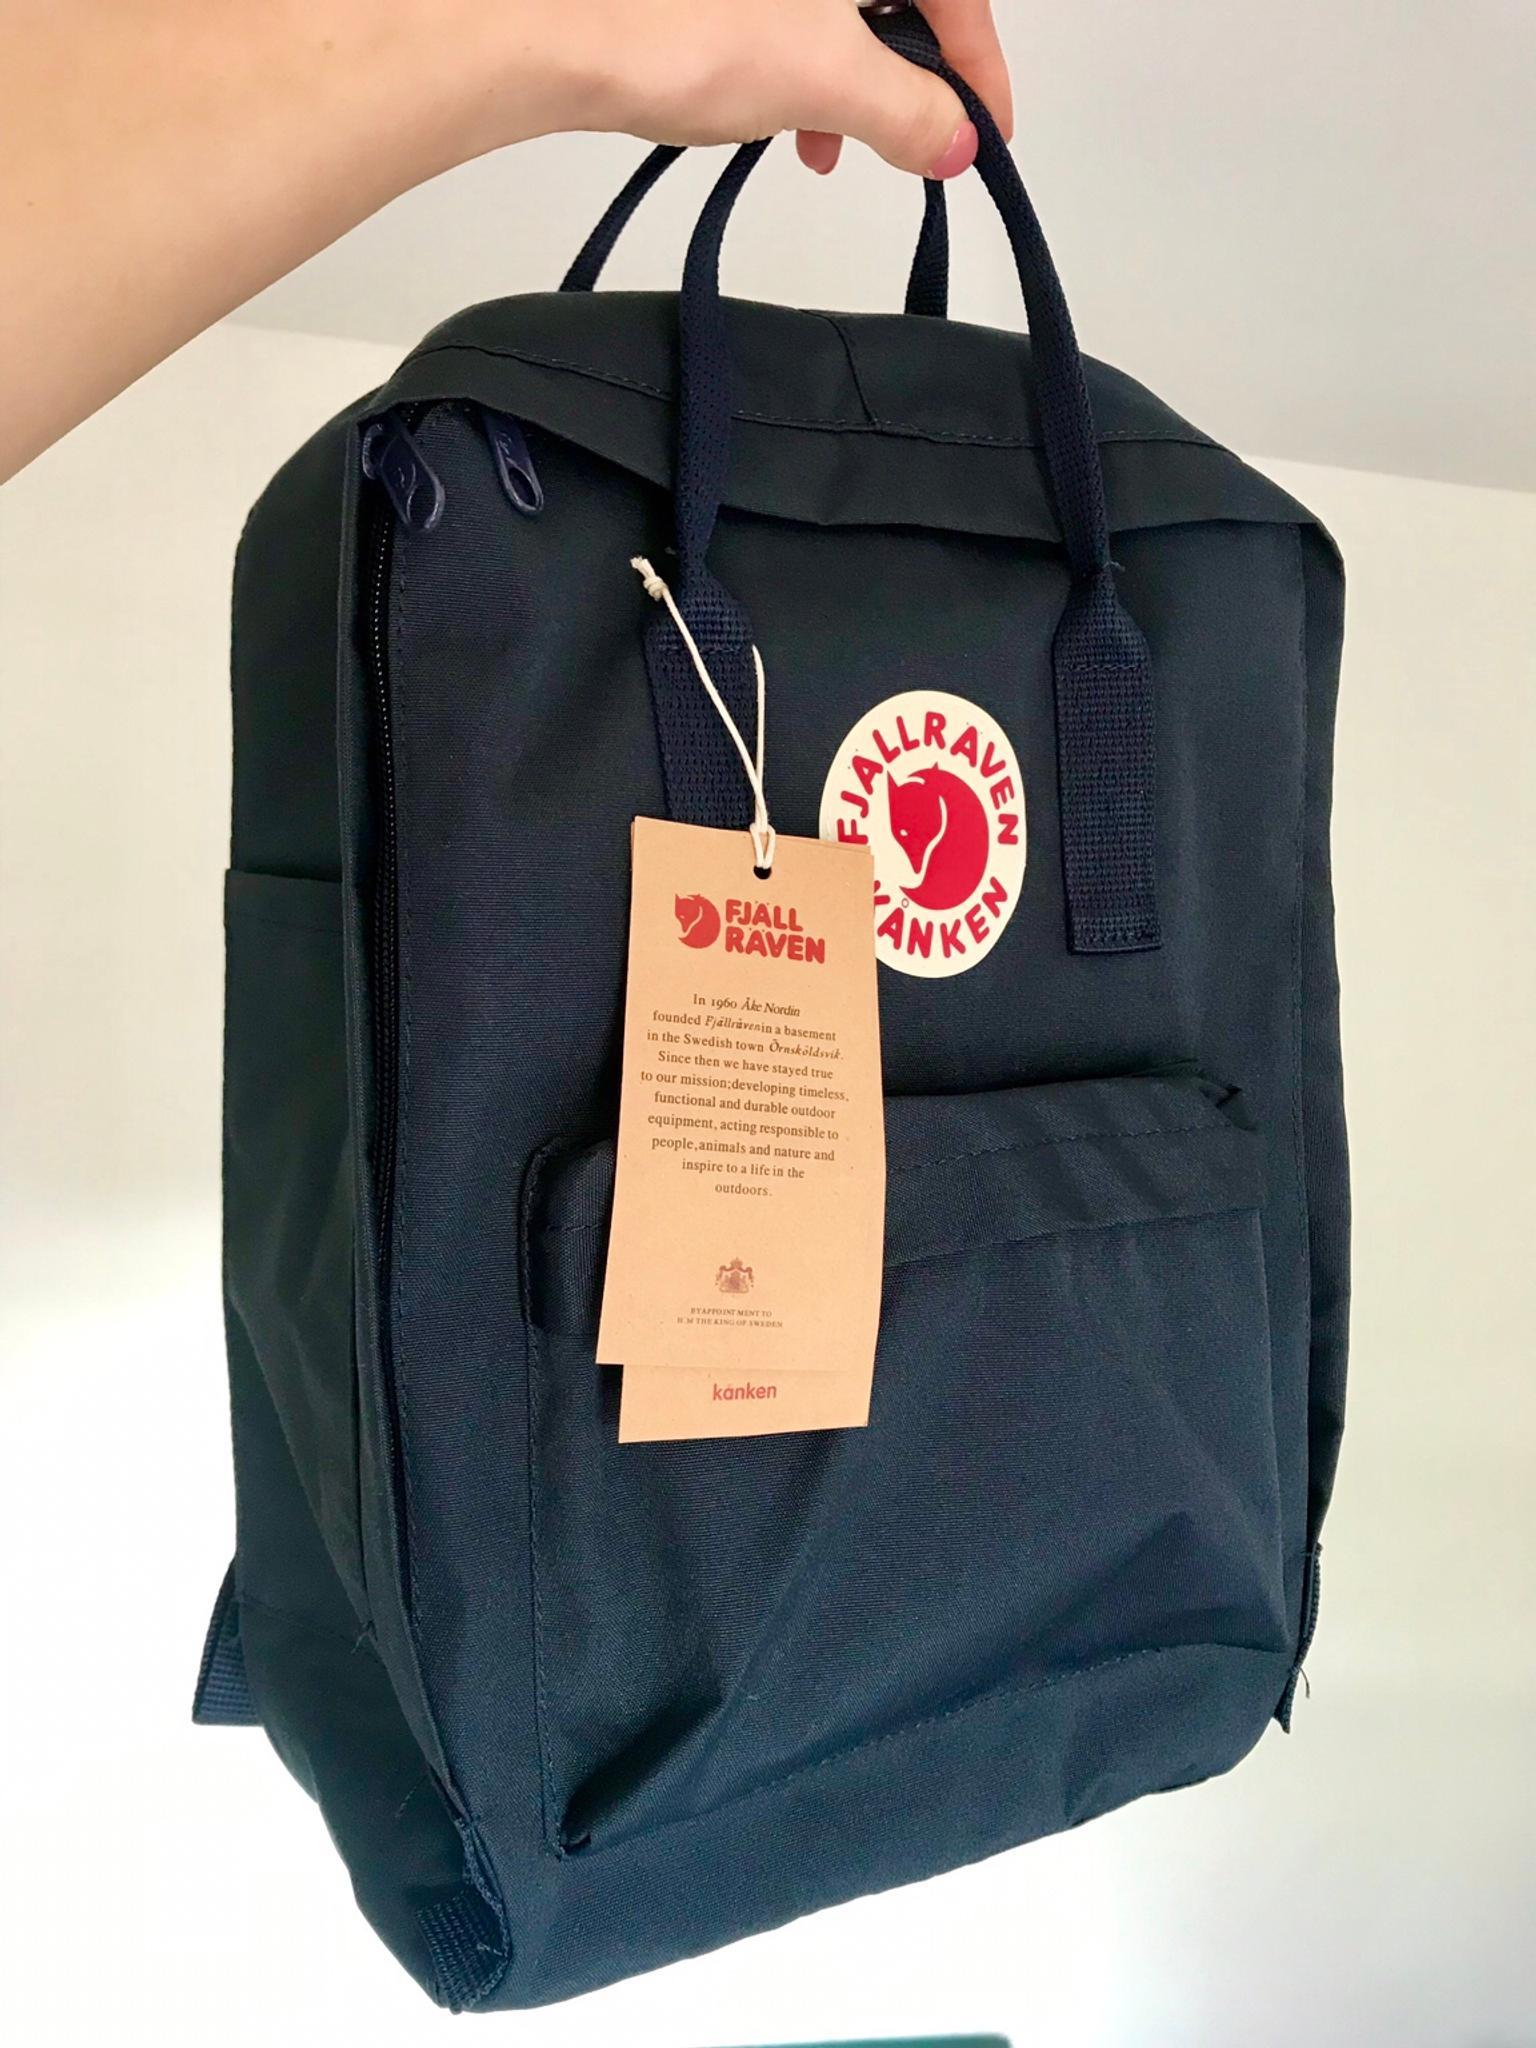 Fjallraven Kanken backpack - Navy, Brand New in for £50.00 for sale Shpock